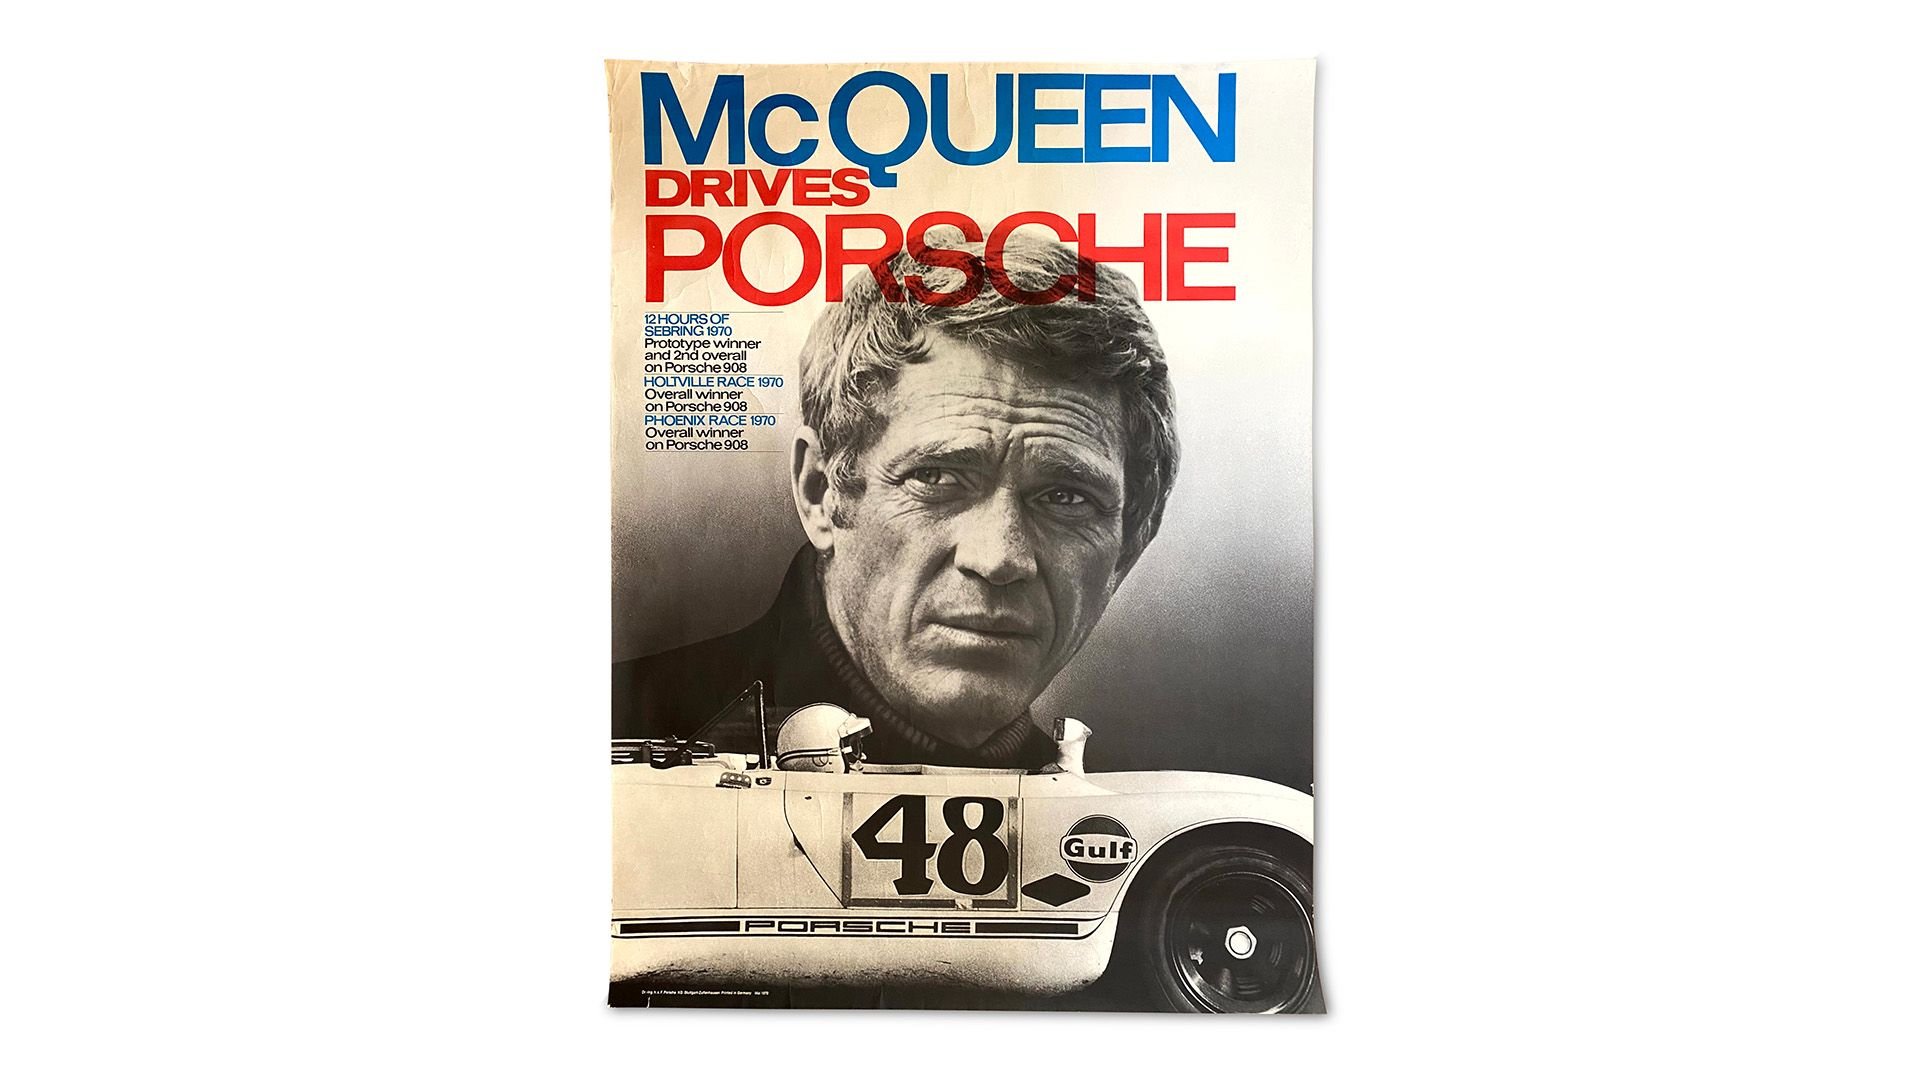 For Sale 1970 12 Hours of Sebring "McQueen Drives Porsche" Factory Racing Poster